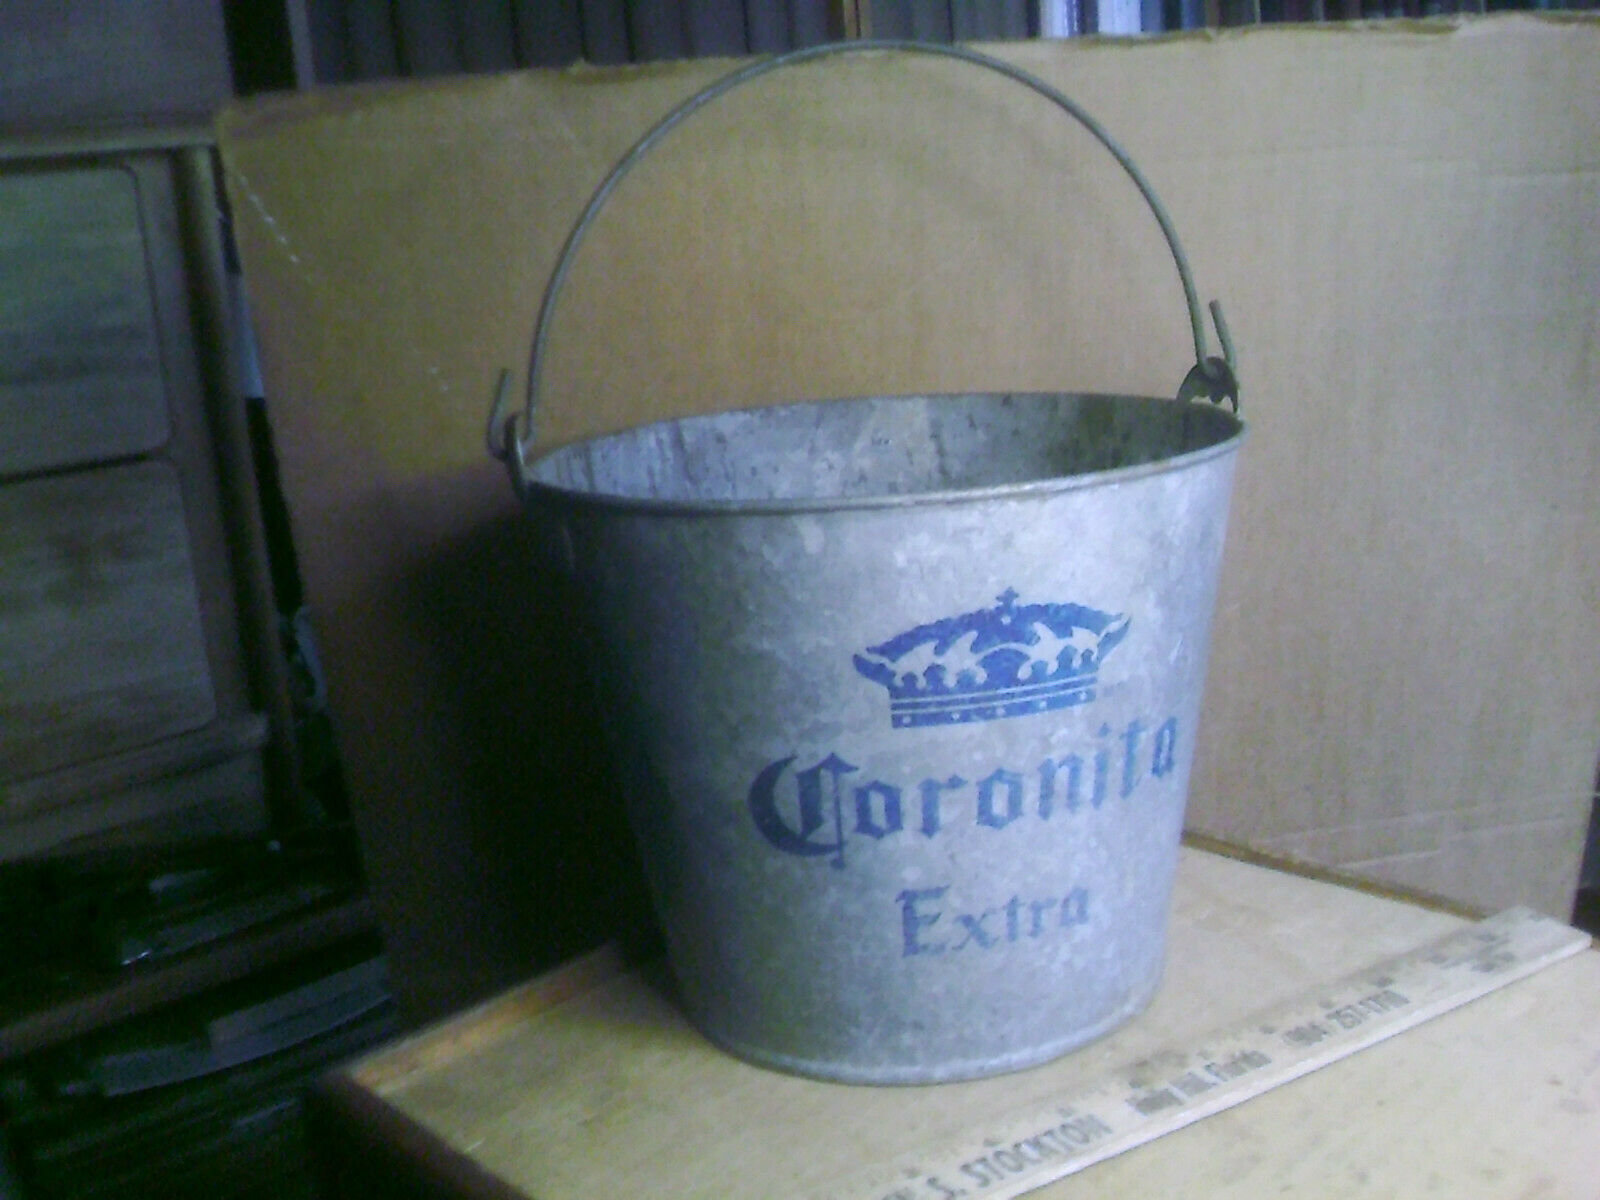 Coronita Extra Corona Beer tin bucket with insert vintage old advertising sign